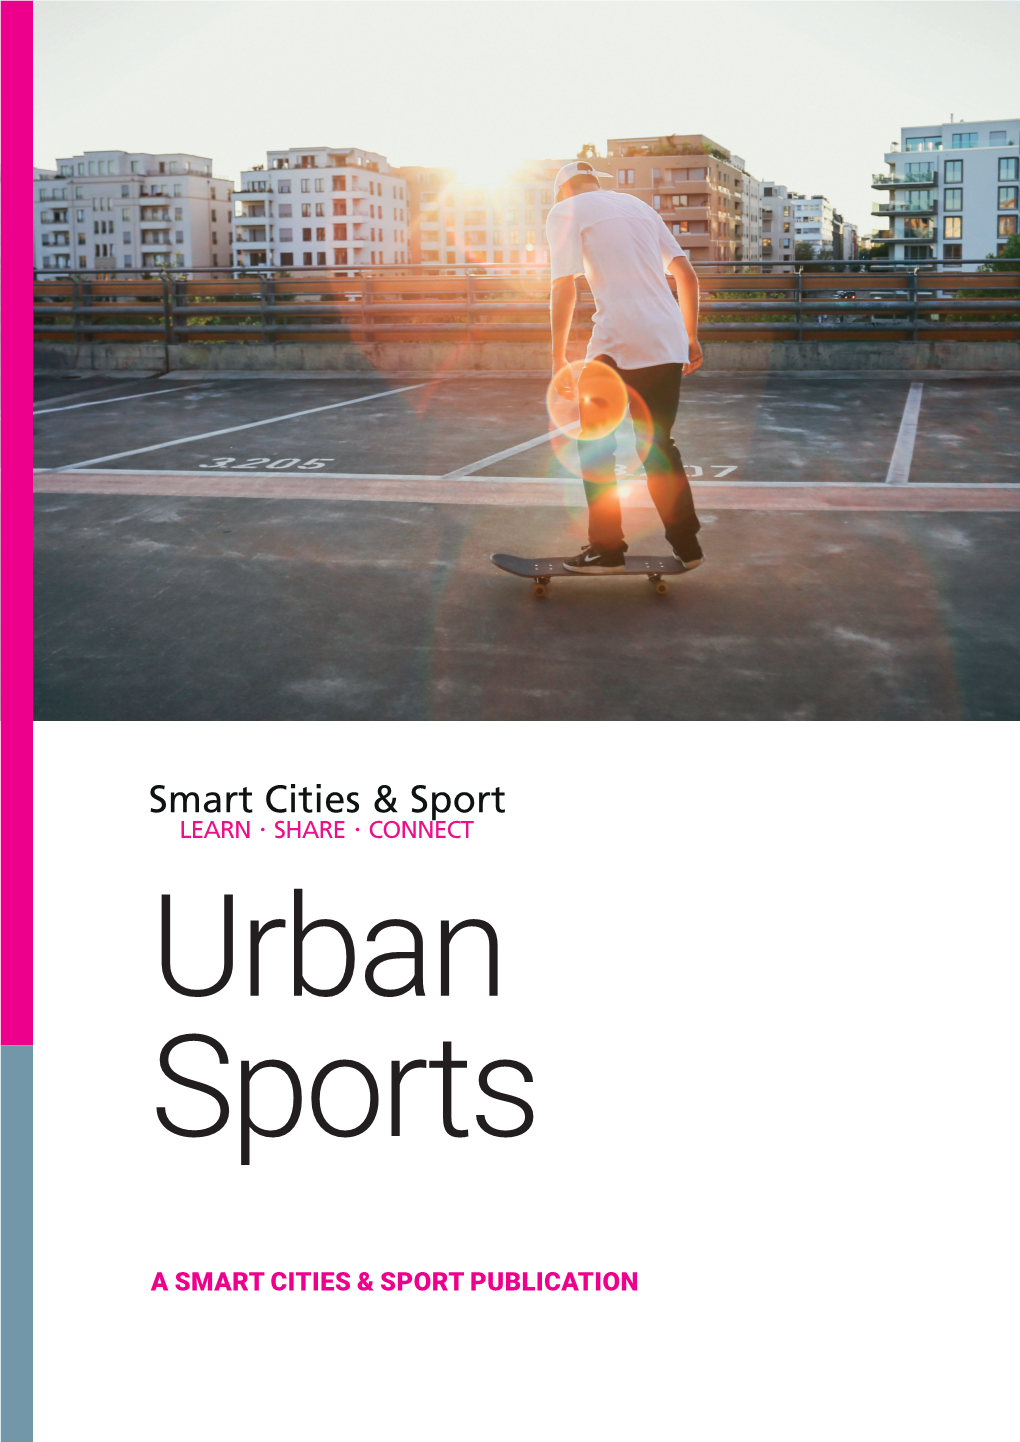 A Smart Cities & Sport Publication